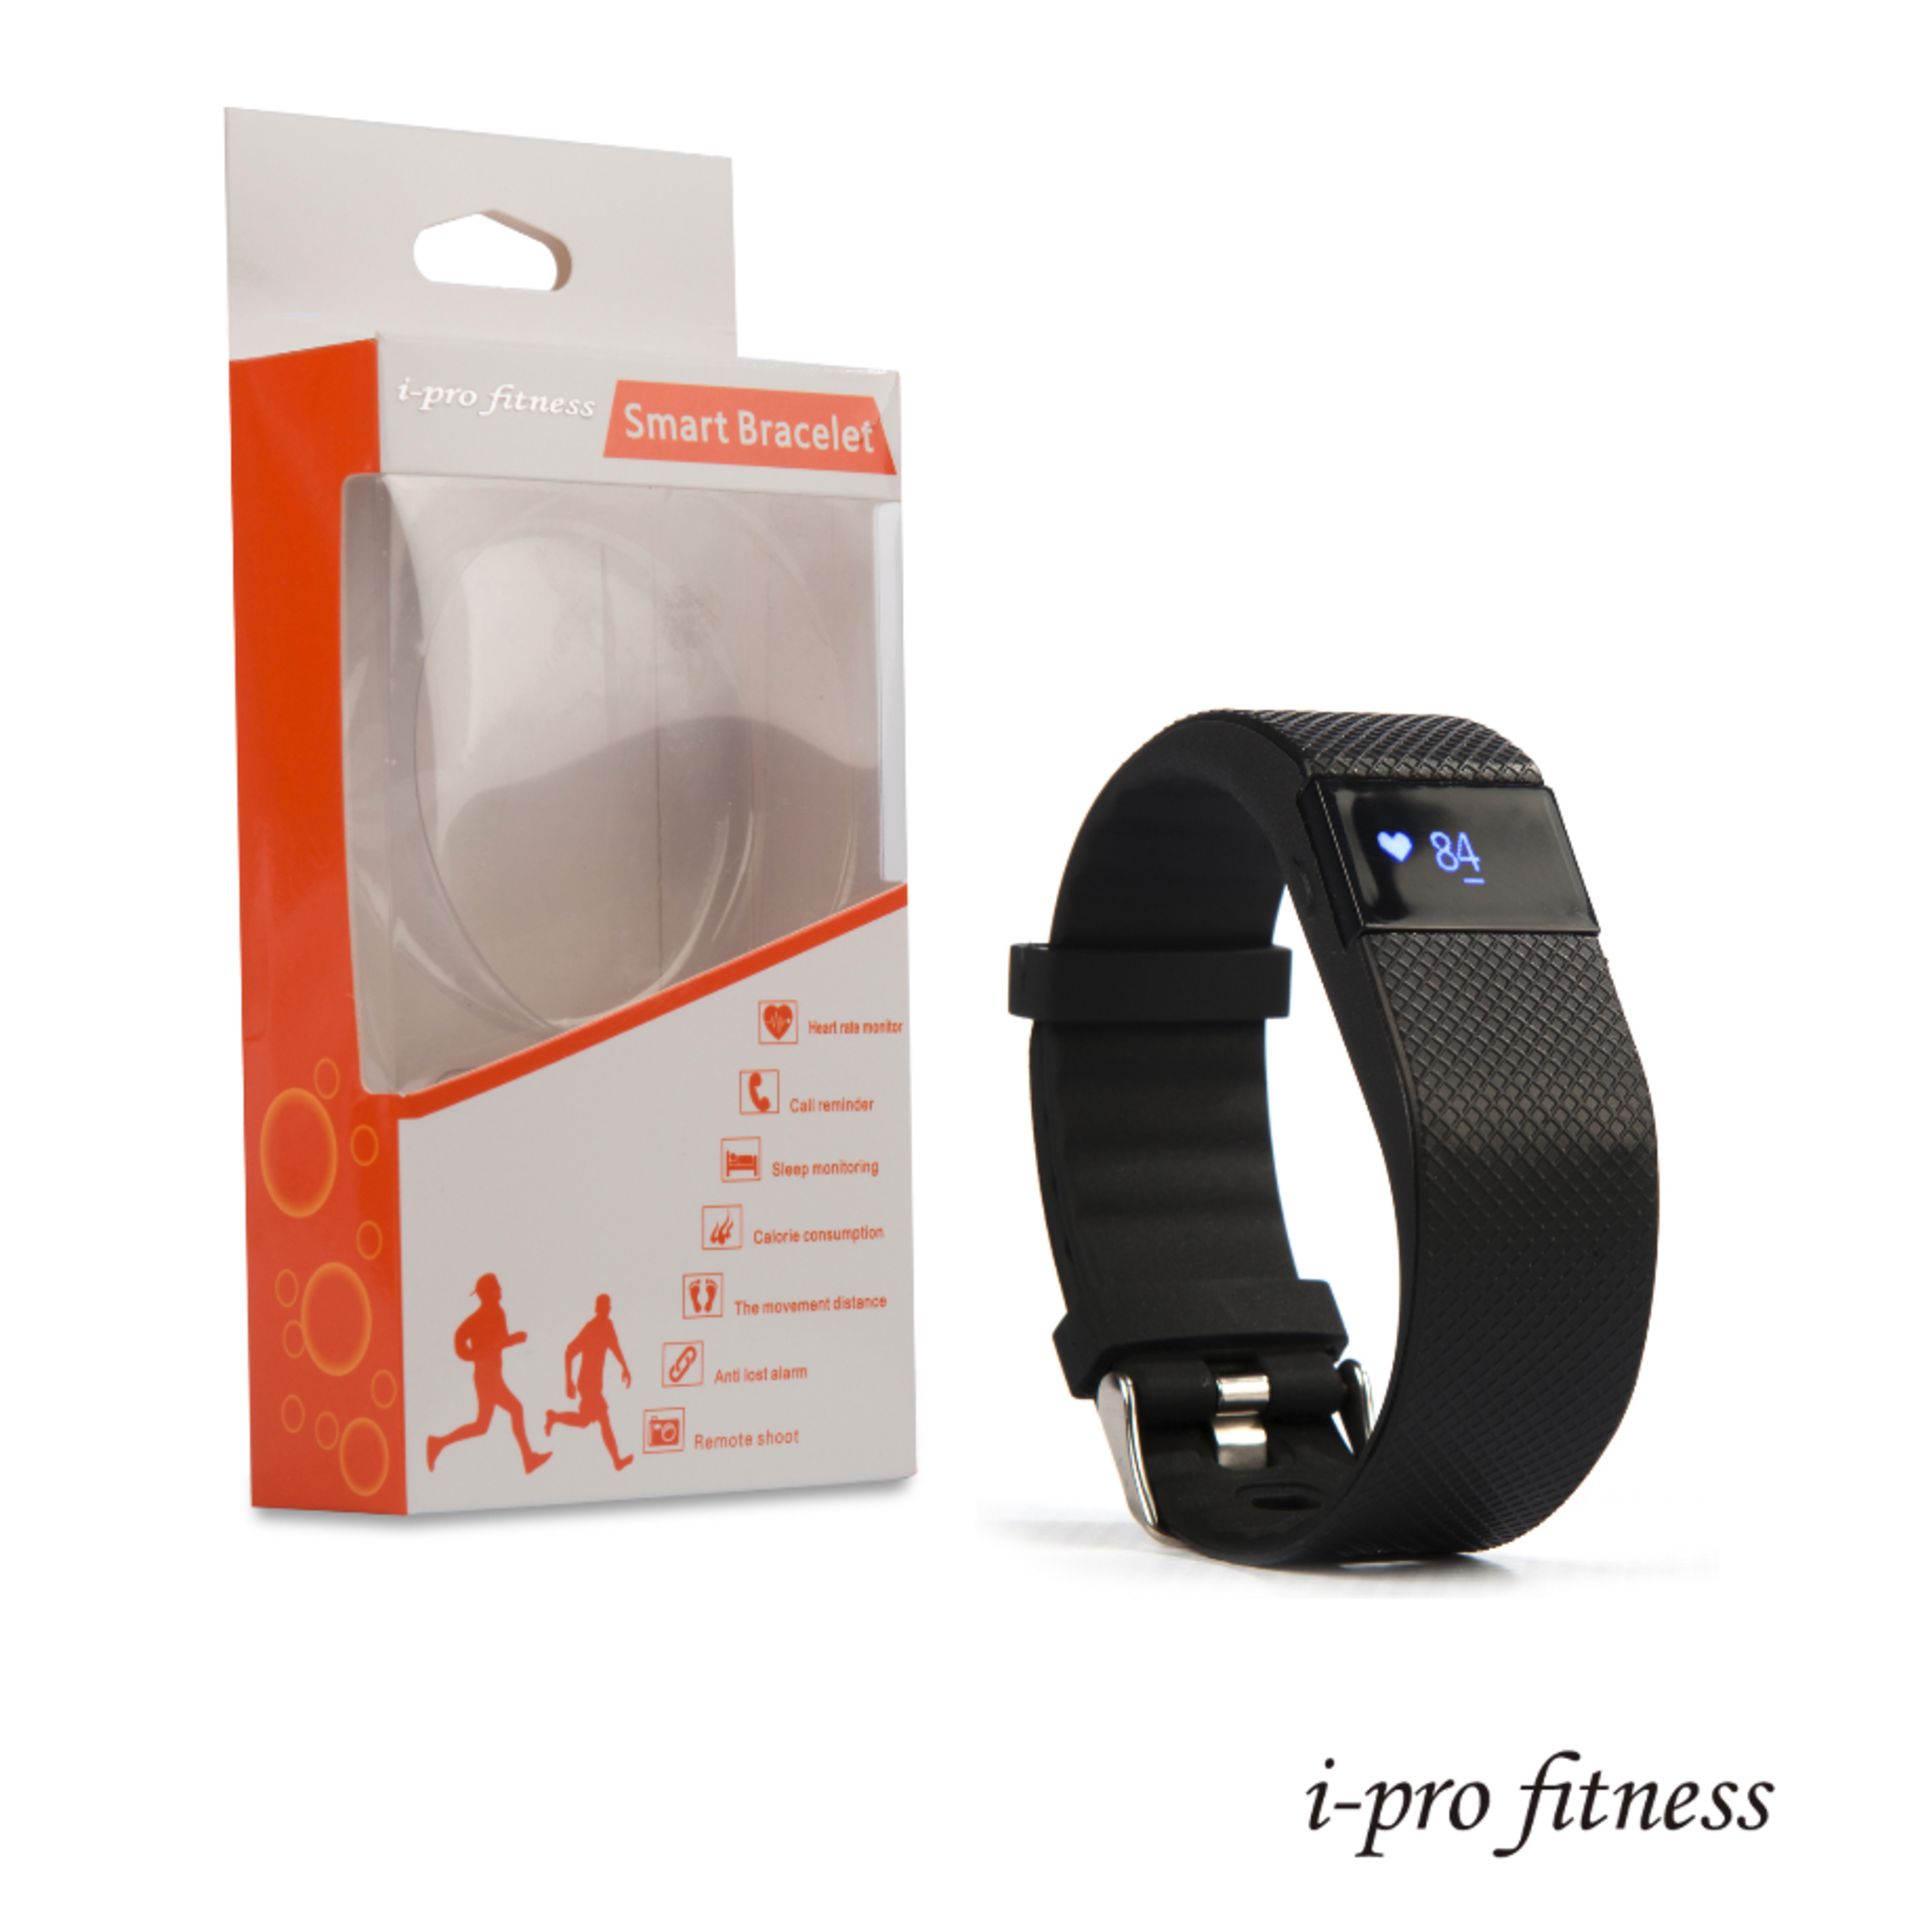 **Trade lot** 50 x Units Fitness Tracker i-pro fitness, Bluetooth 4.0 Sports Smart Bracelet - Image 7 of 8